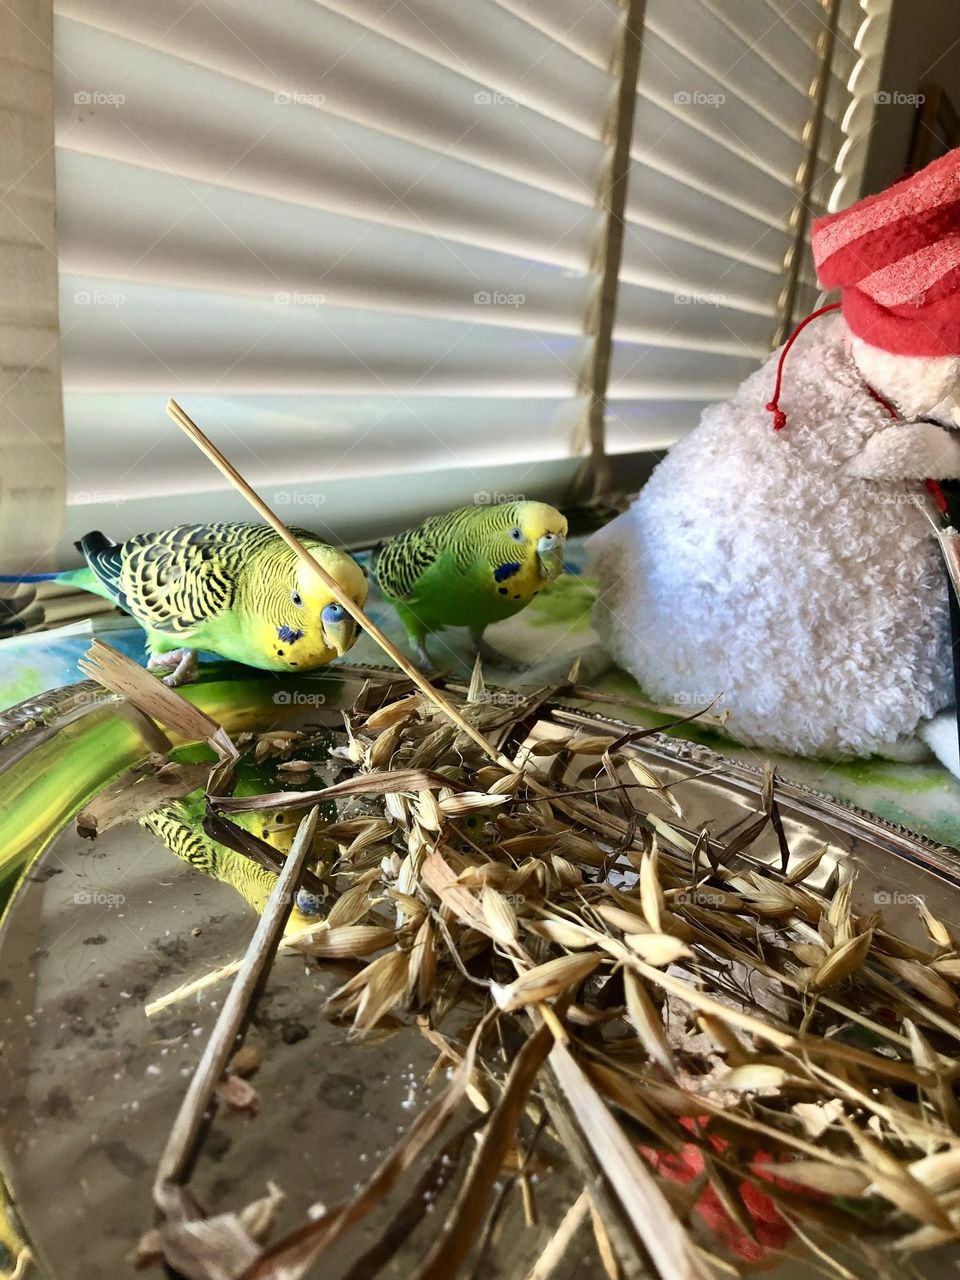 Family pets Kiwi and Coco 